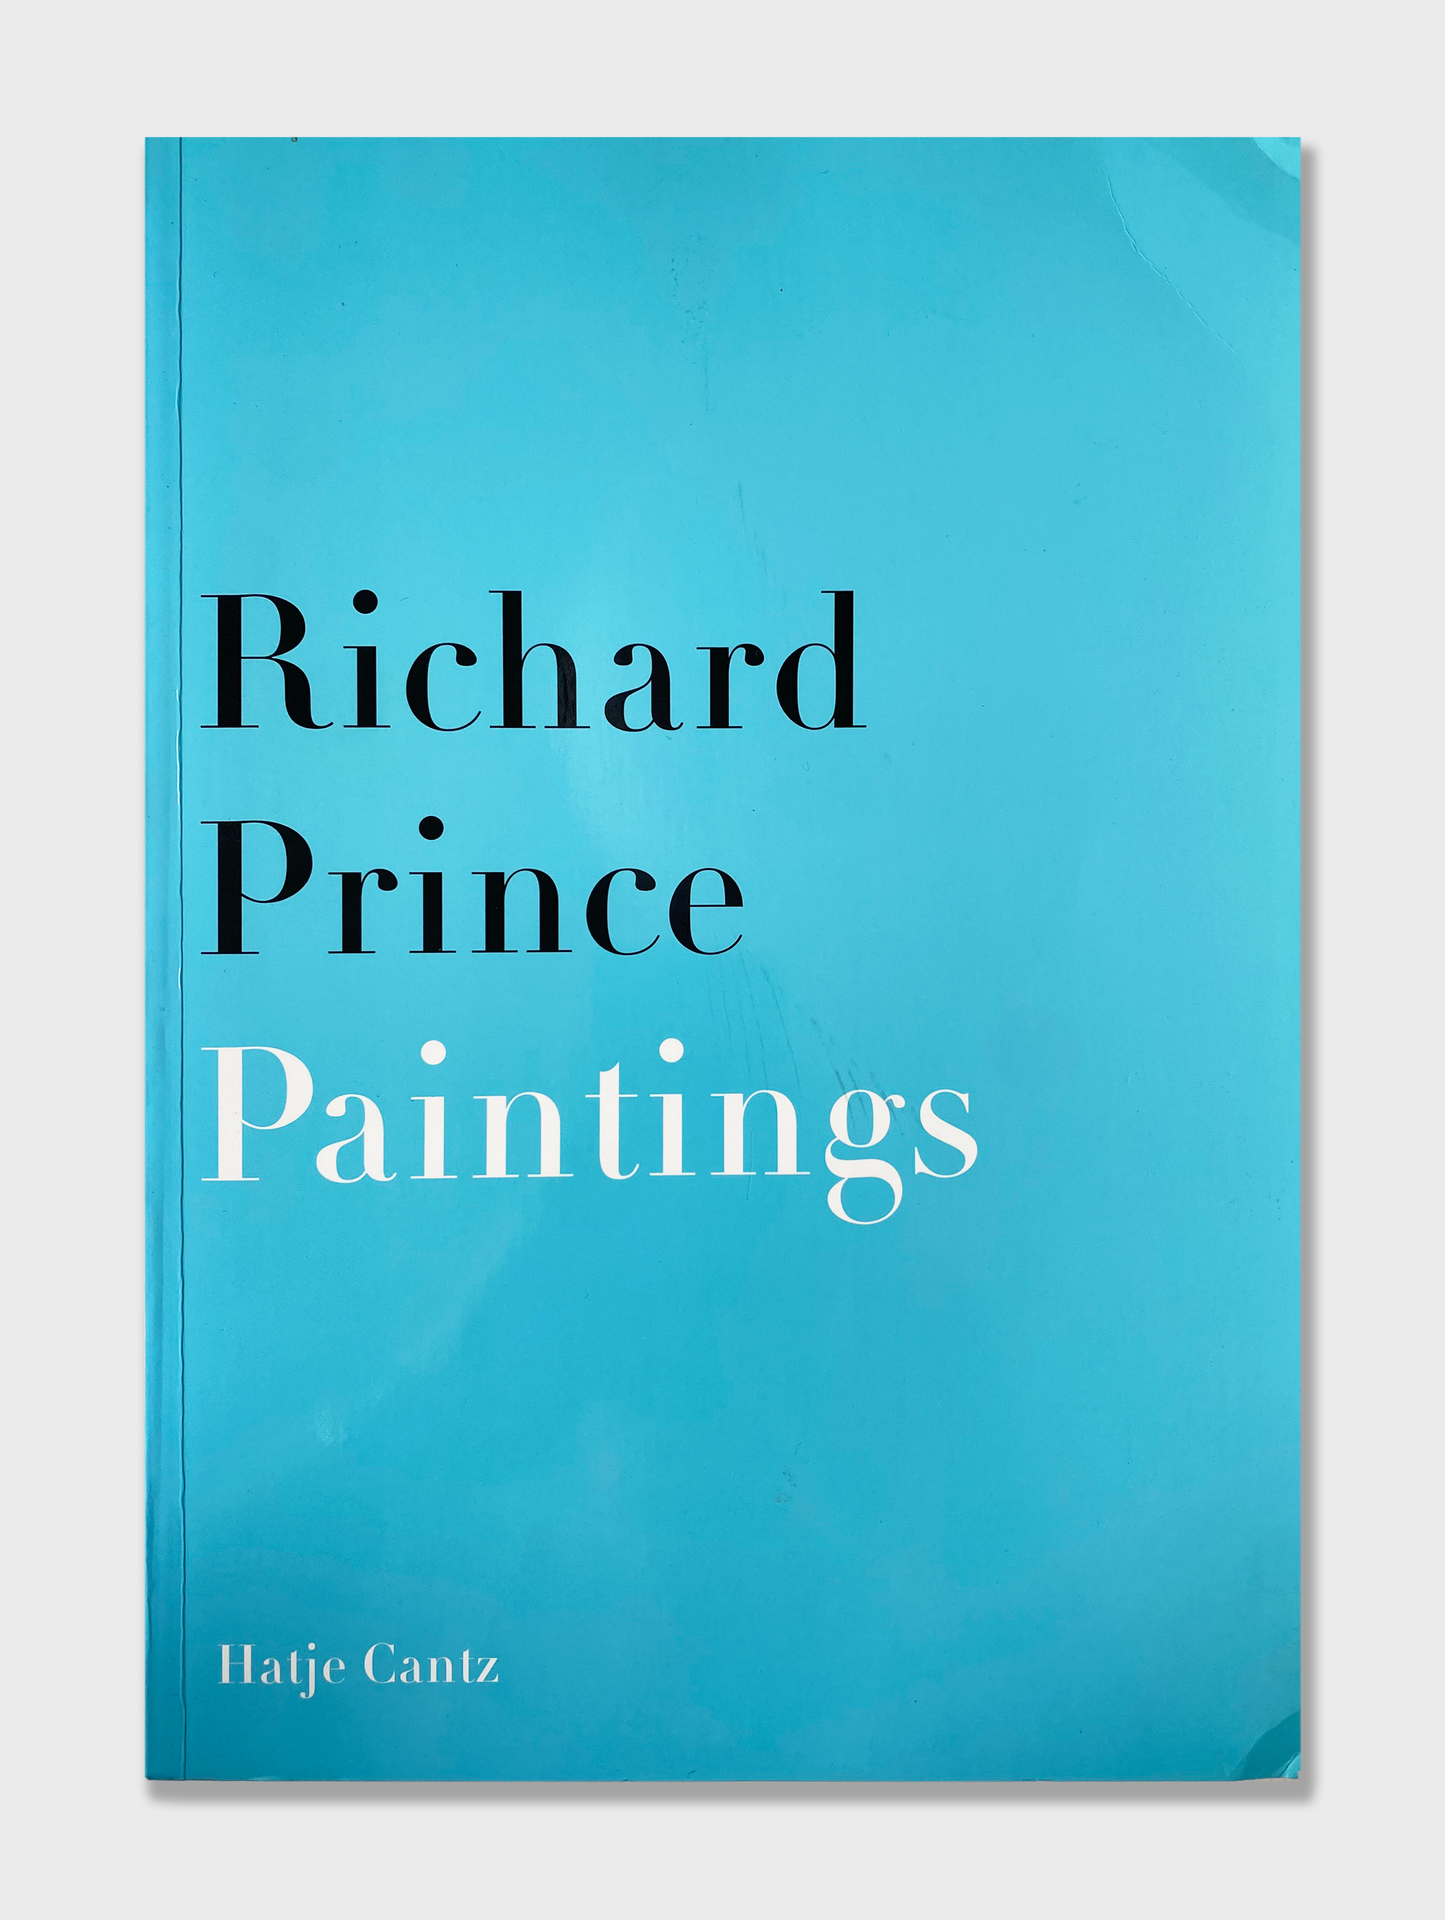 Richard Prince - Paintings / Photographs (2002)